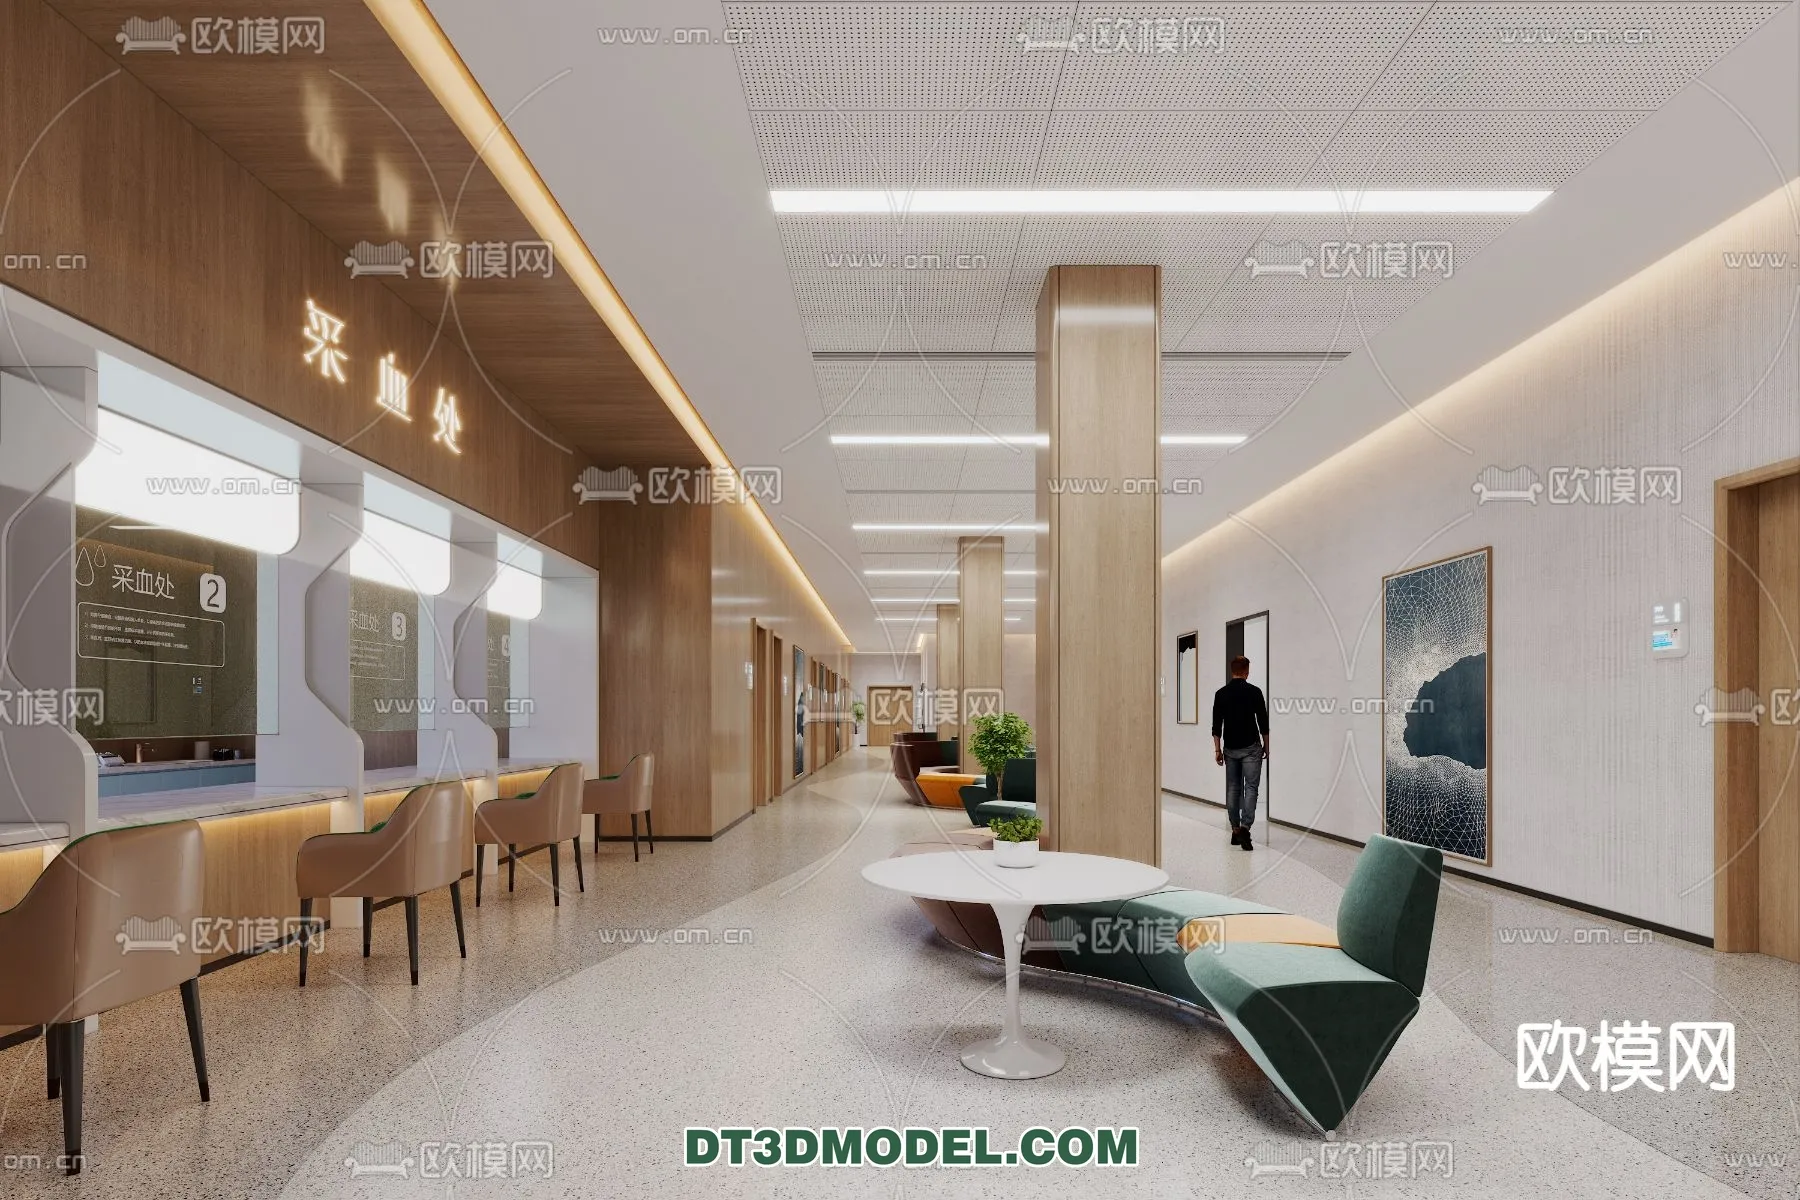 HOSPITAL 3D SCENES – MODERN – 0031